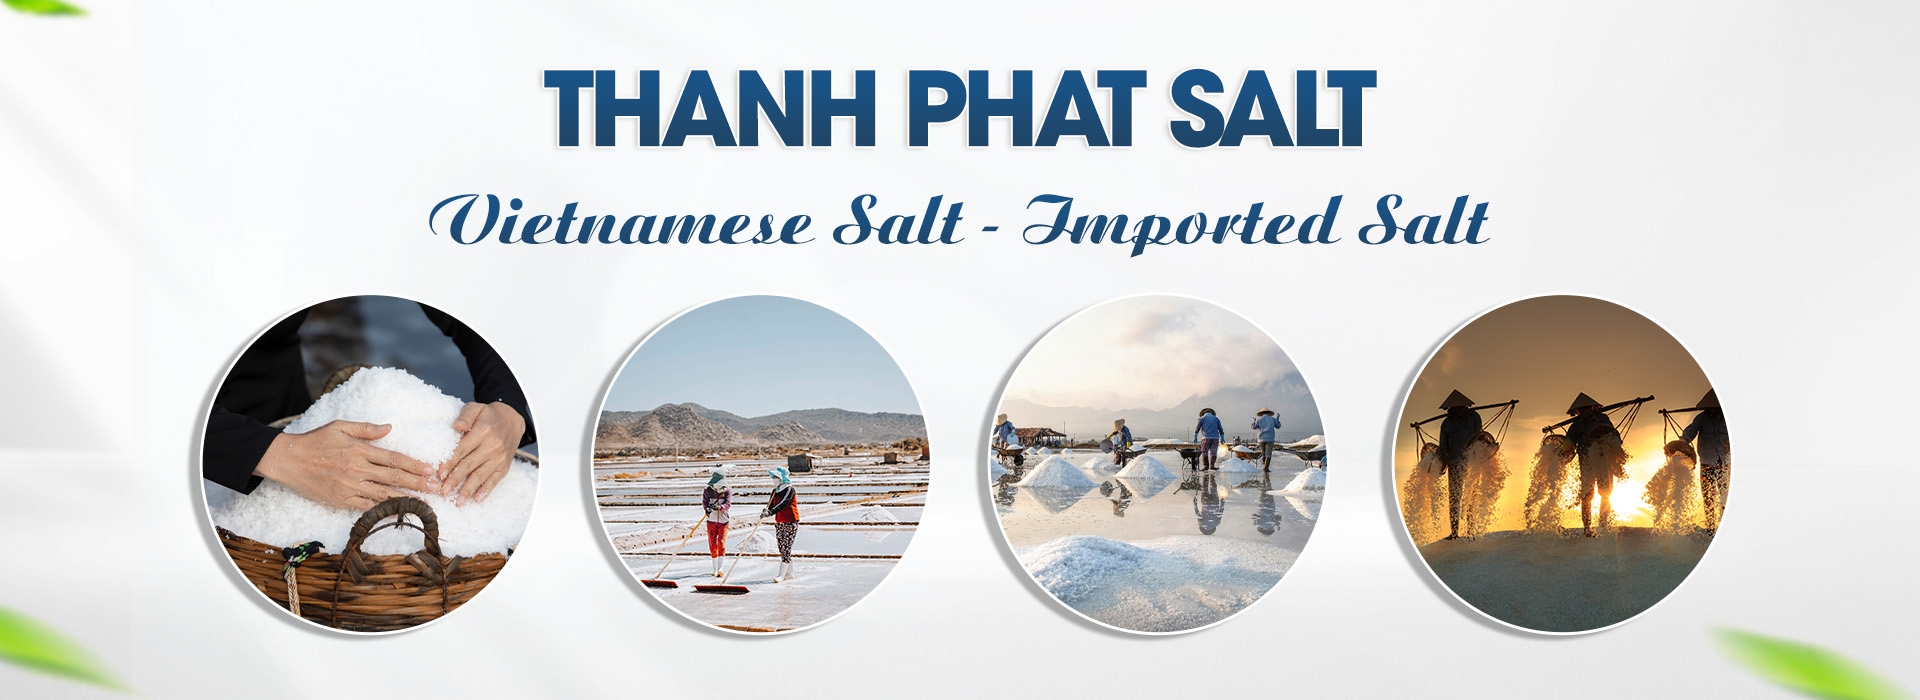 Thanh Phat Salt Co., Ltd